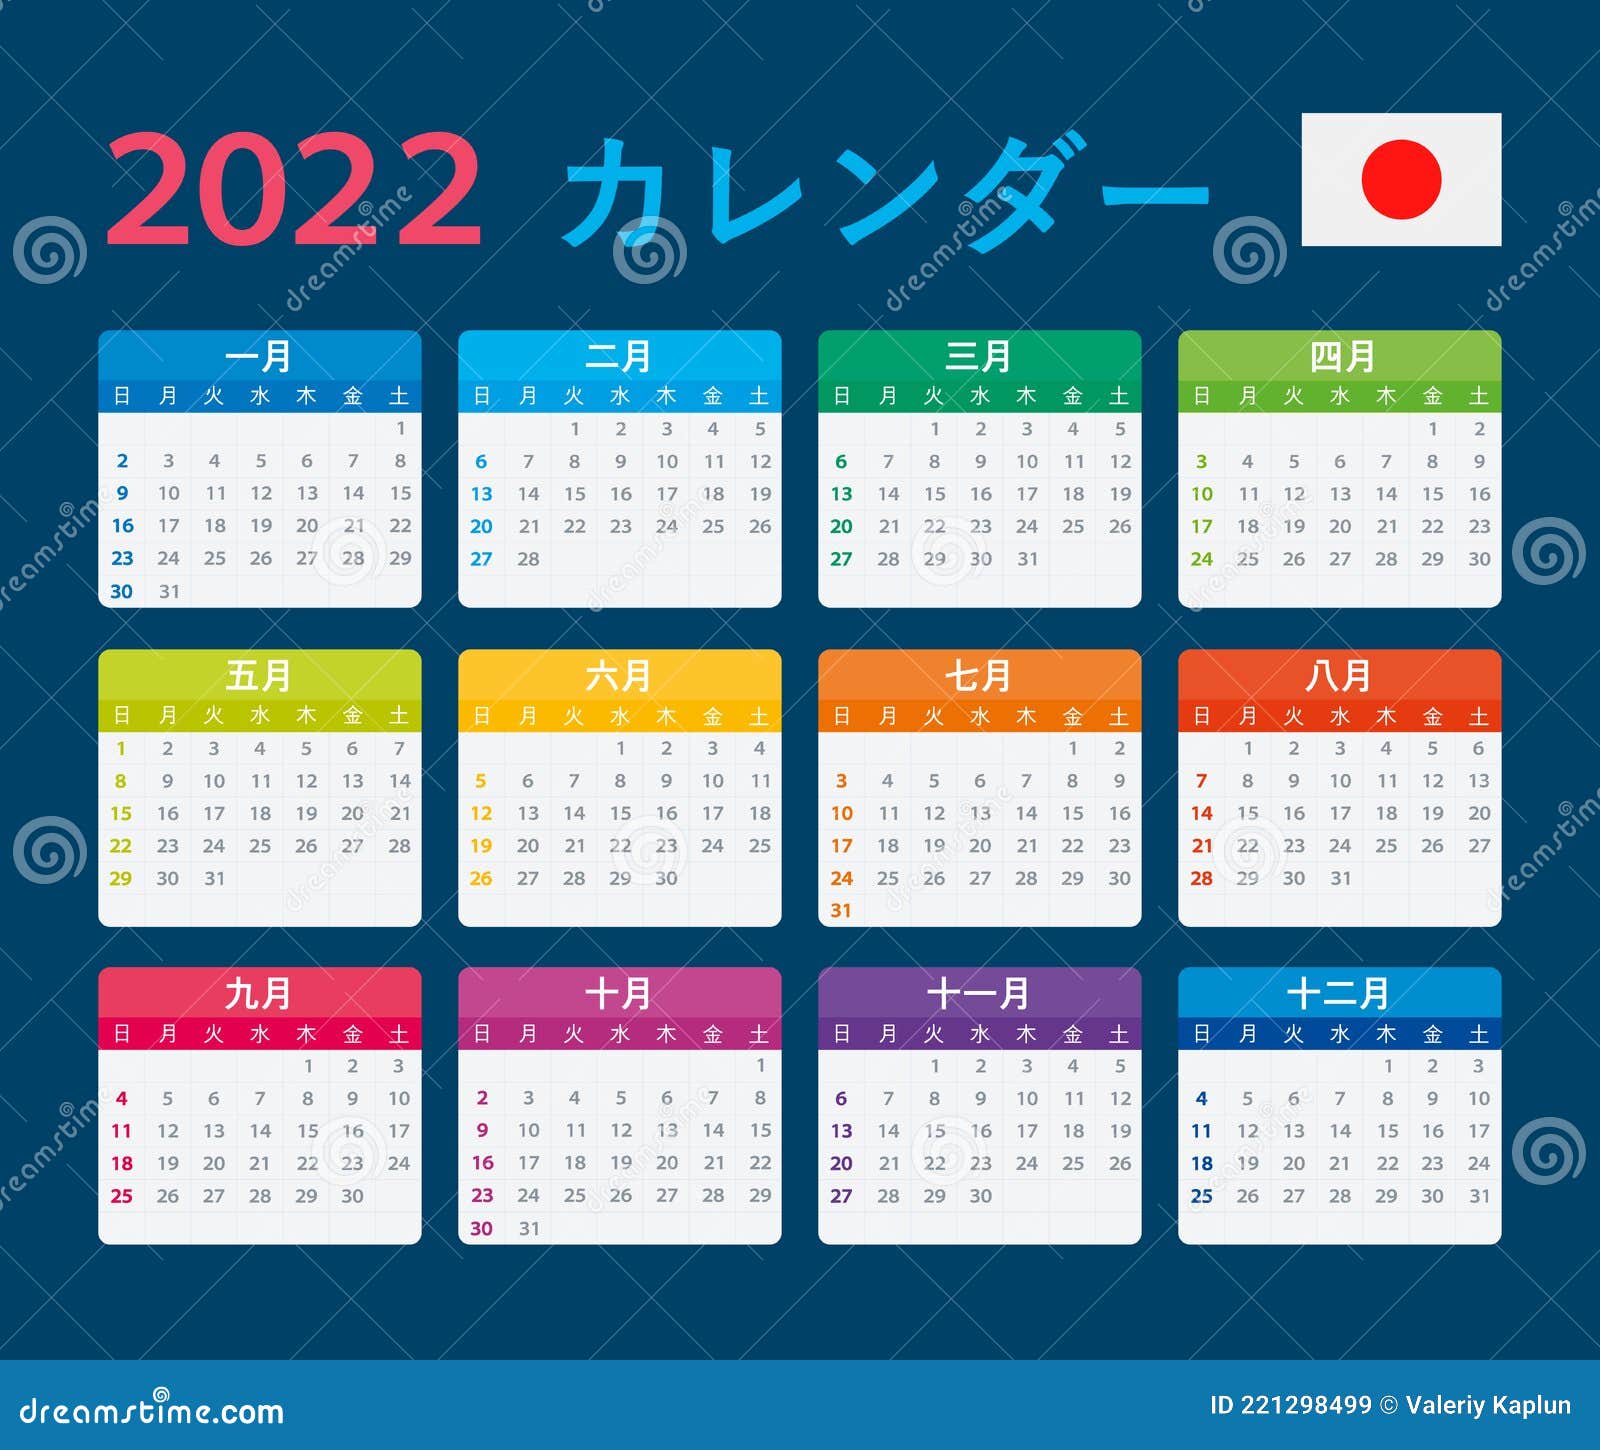 2022 Calendar - Vector Template Graphic Illustration - Japan Version ...